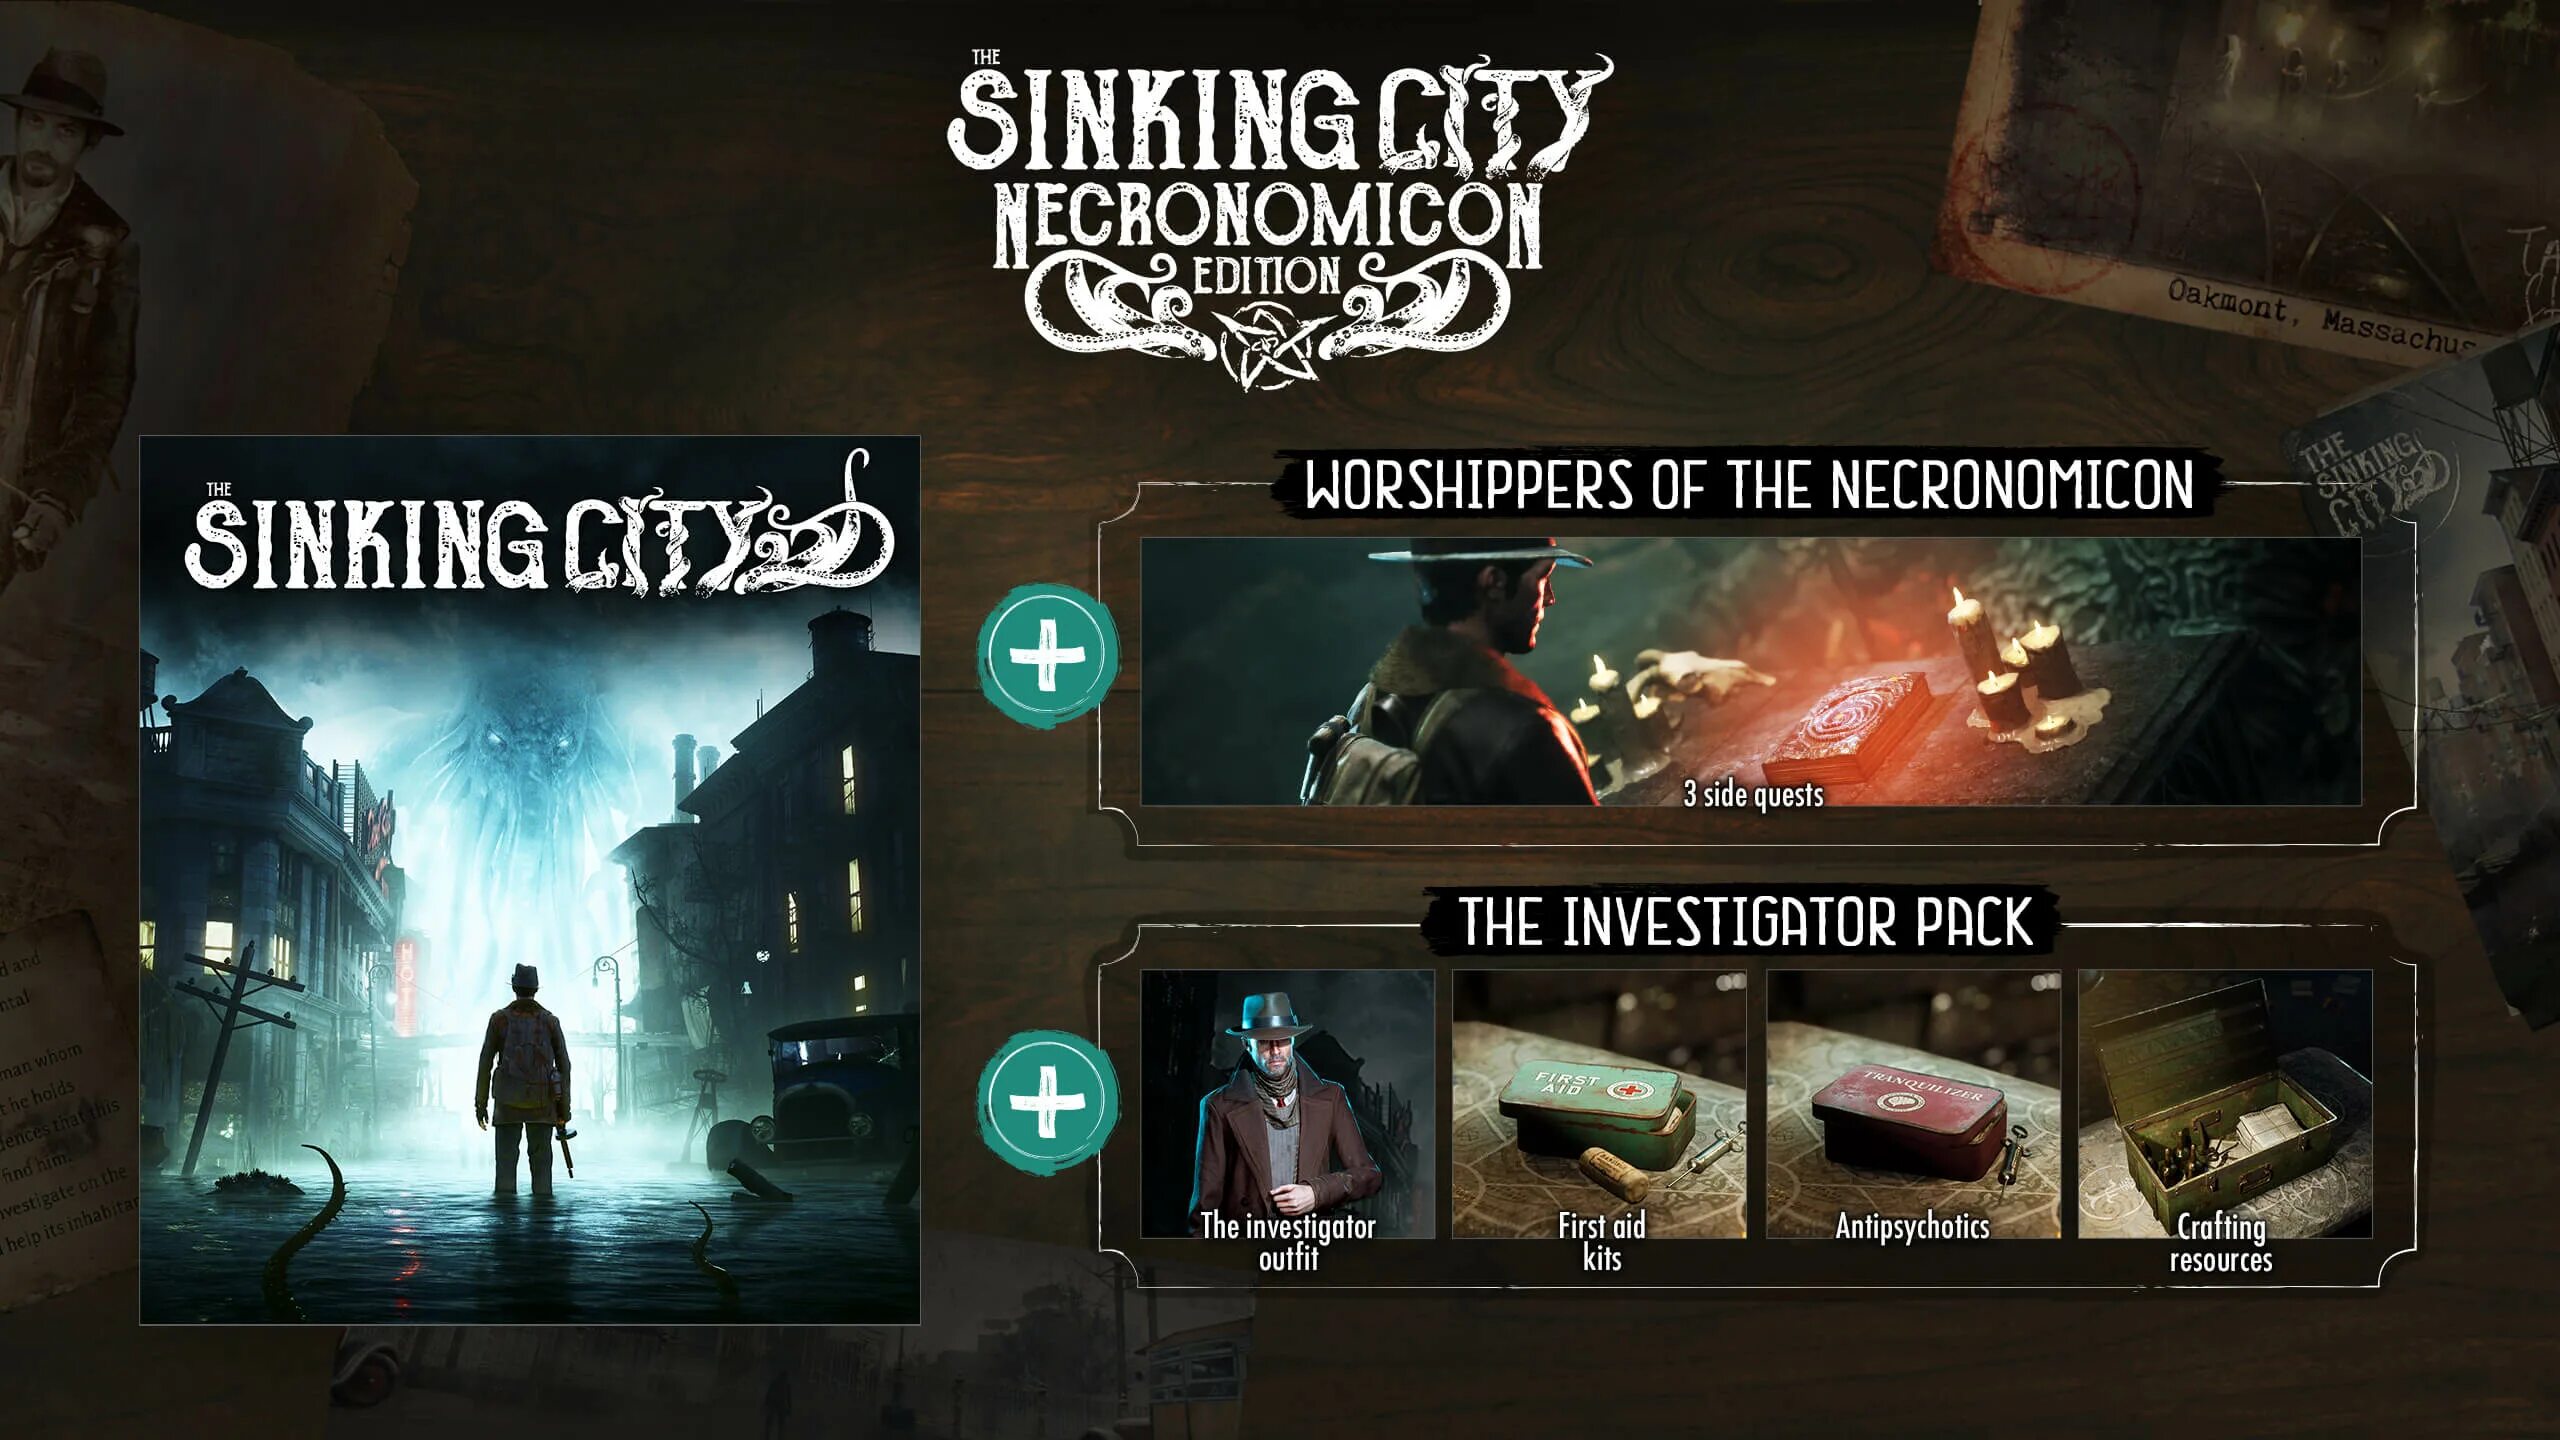 The sinking city купить. The Sinking City: Necronomicon Edition. The Sinking City (ps4). The Sinking City Некрономикон. The Sinking City карта.